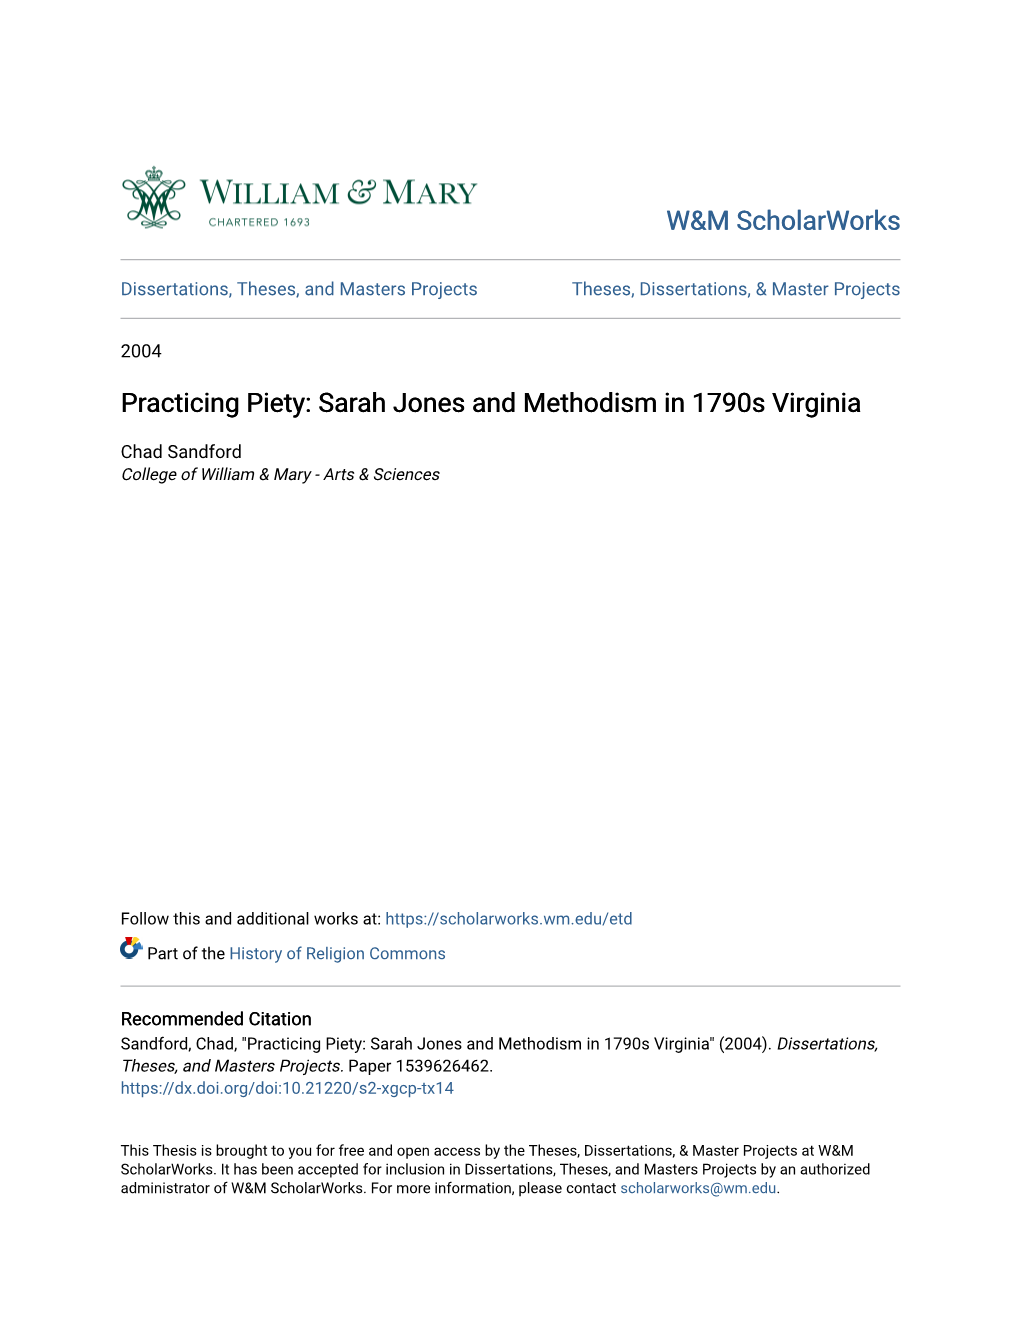 Practicing Piety: Sarah Jones and Methodism in 1790S Virginia